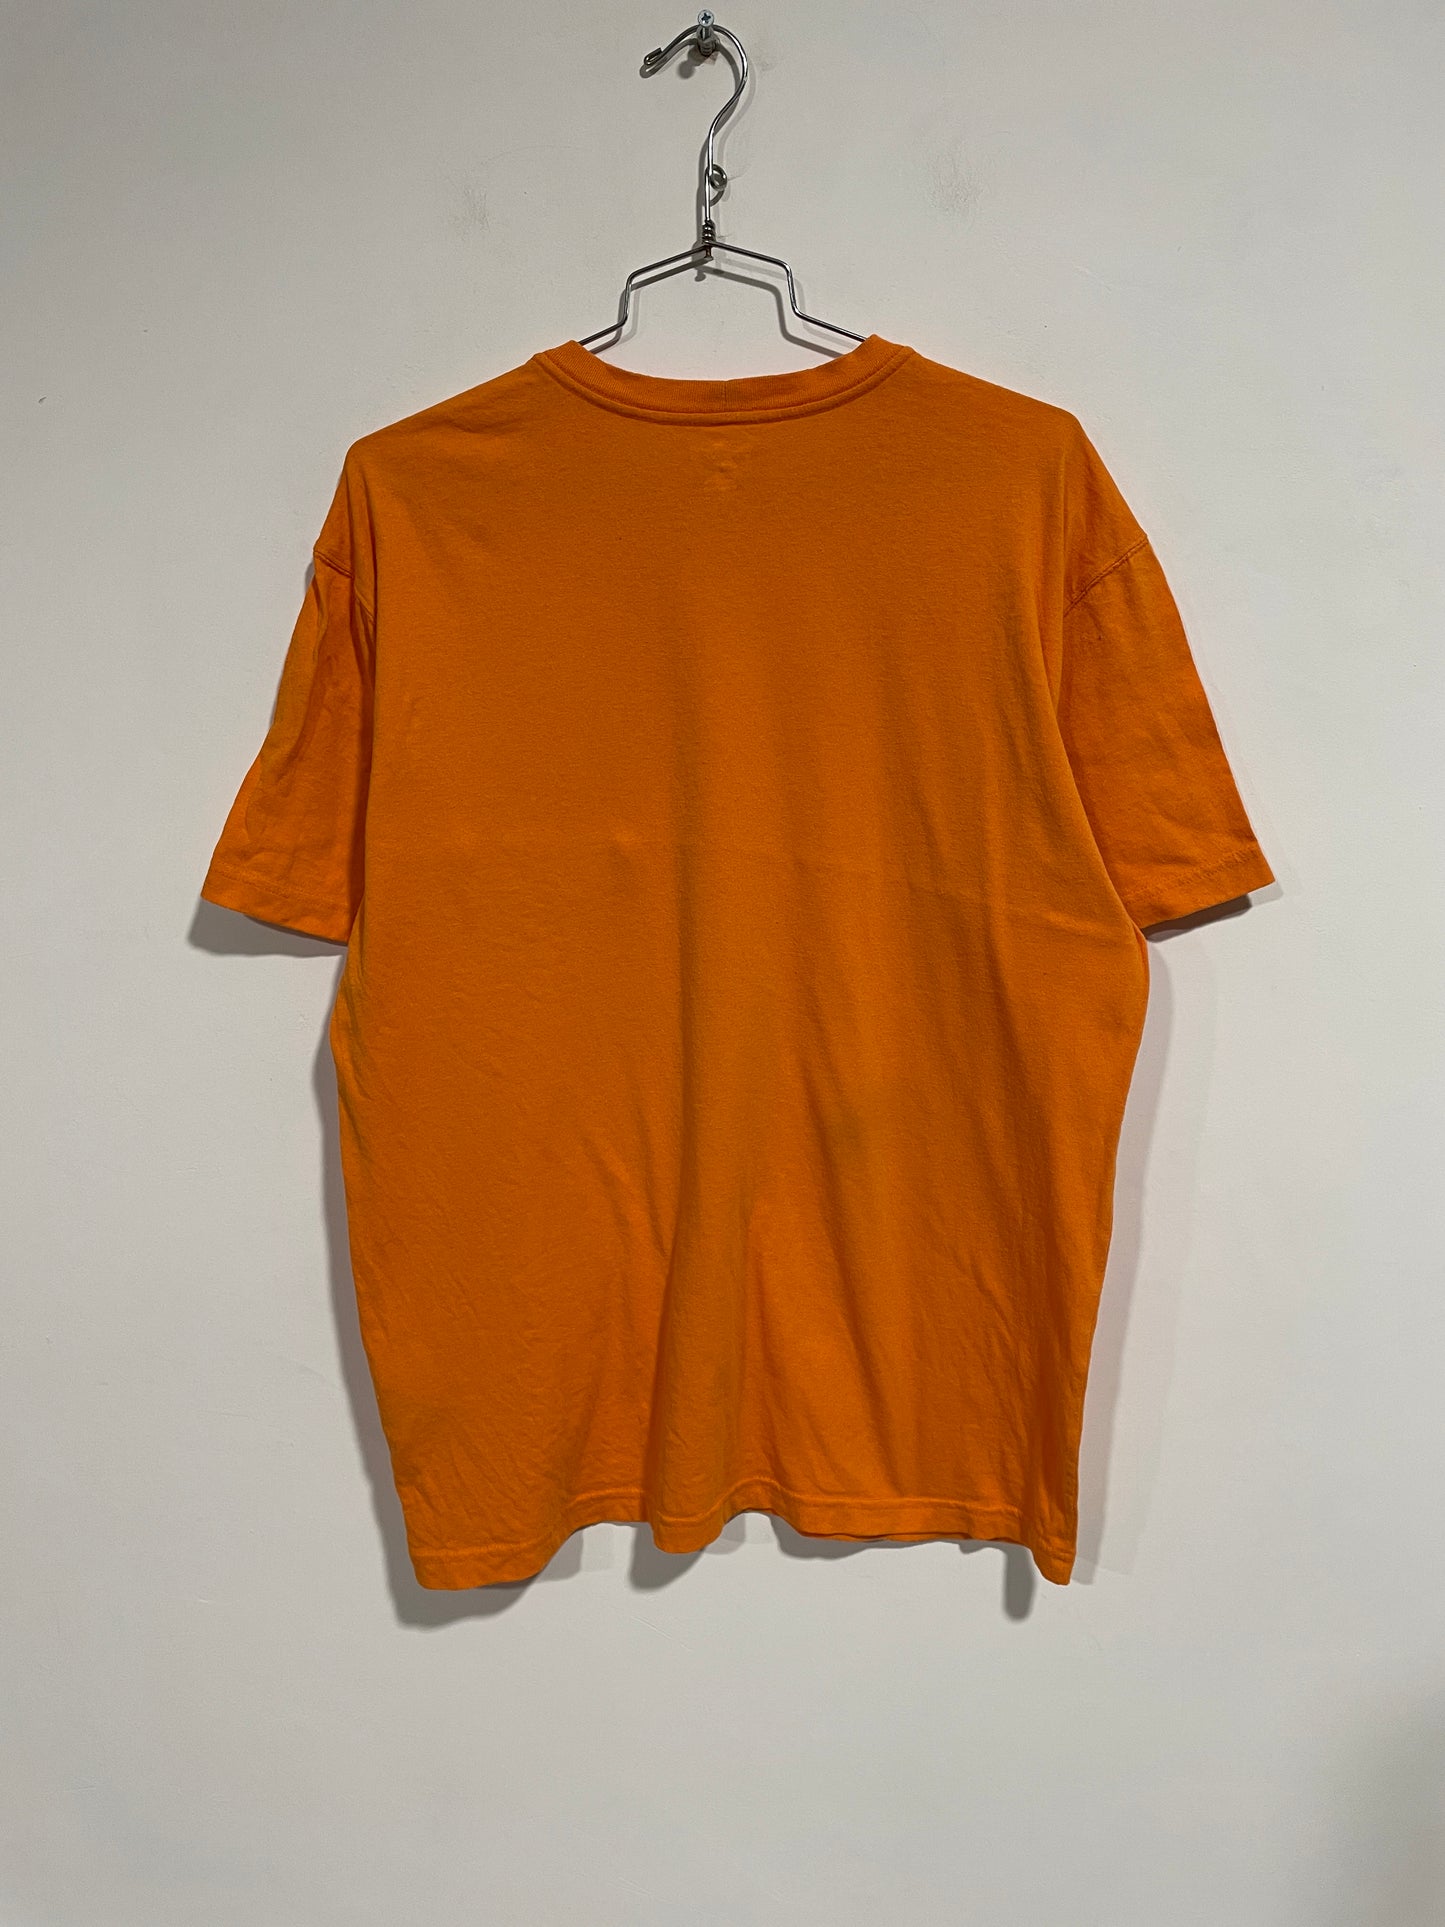 T shirt Carhartt workwear (MR102)